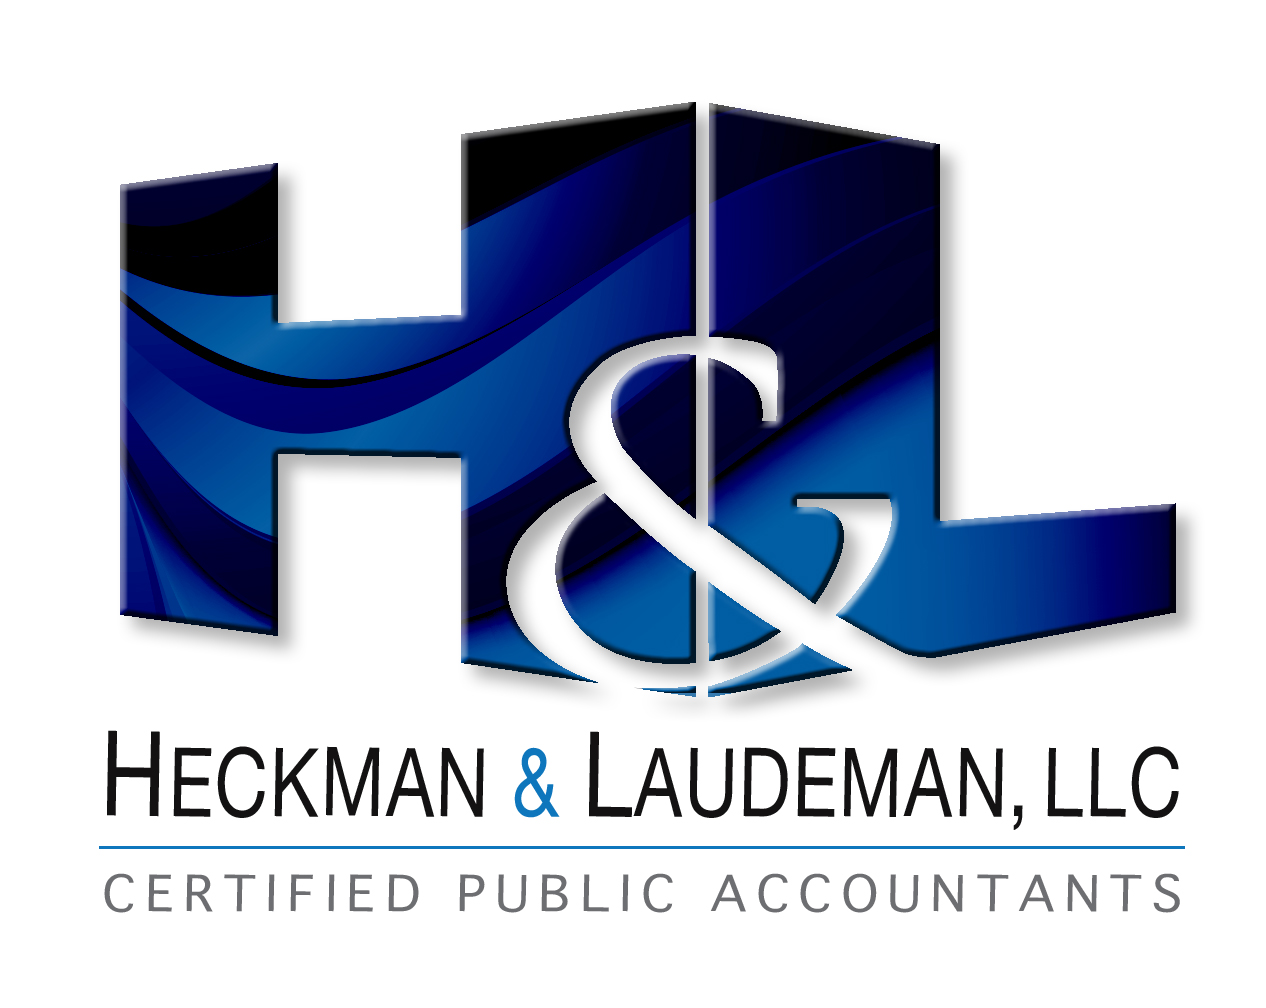 Heckman & Laudeman, LLC 400 Pine Brook Pl # 12, Orwigsburg Pennsylvania 17961